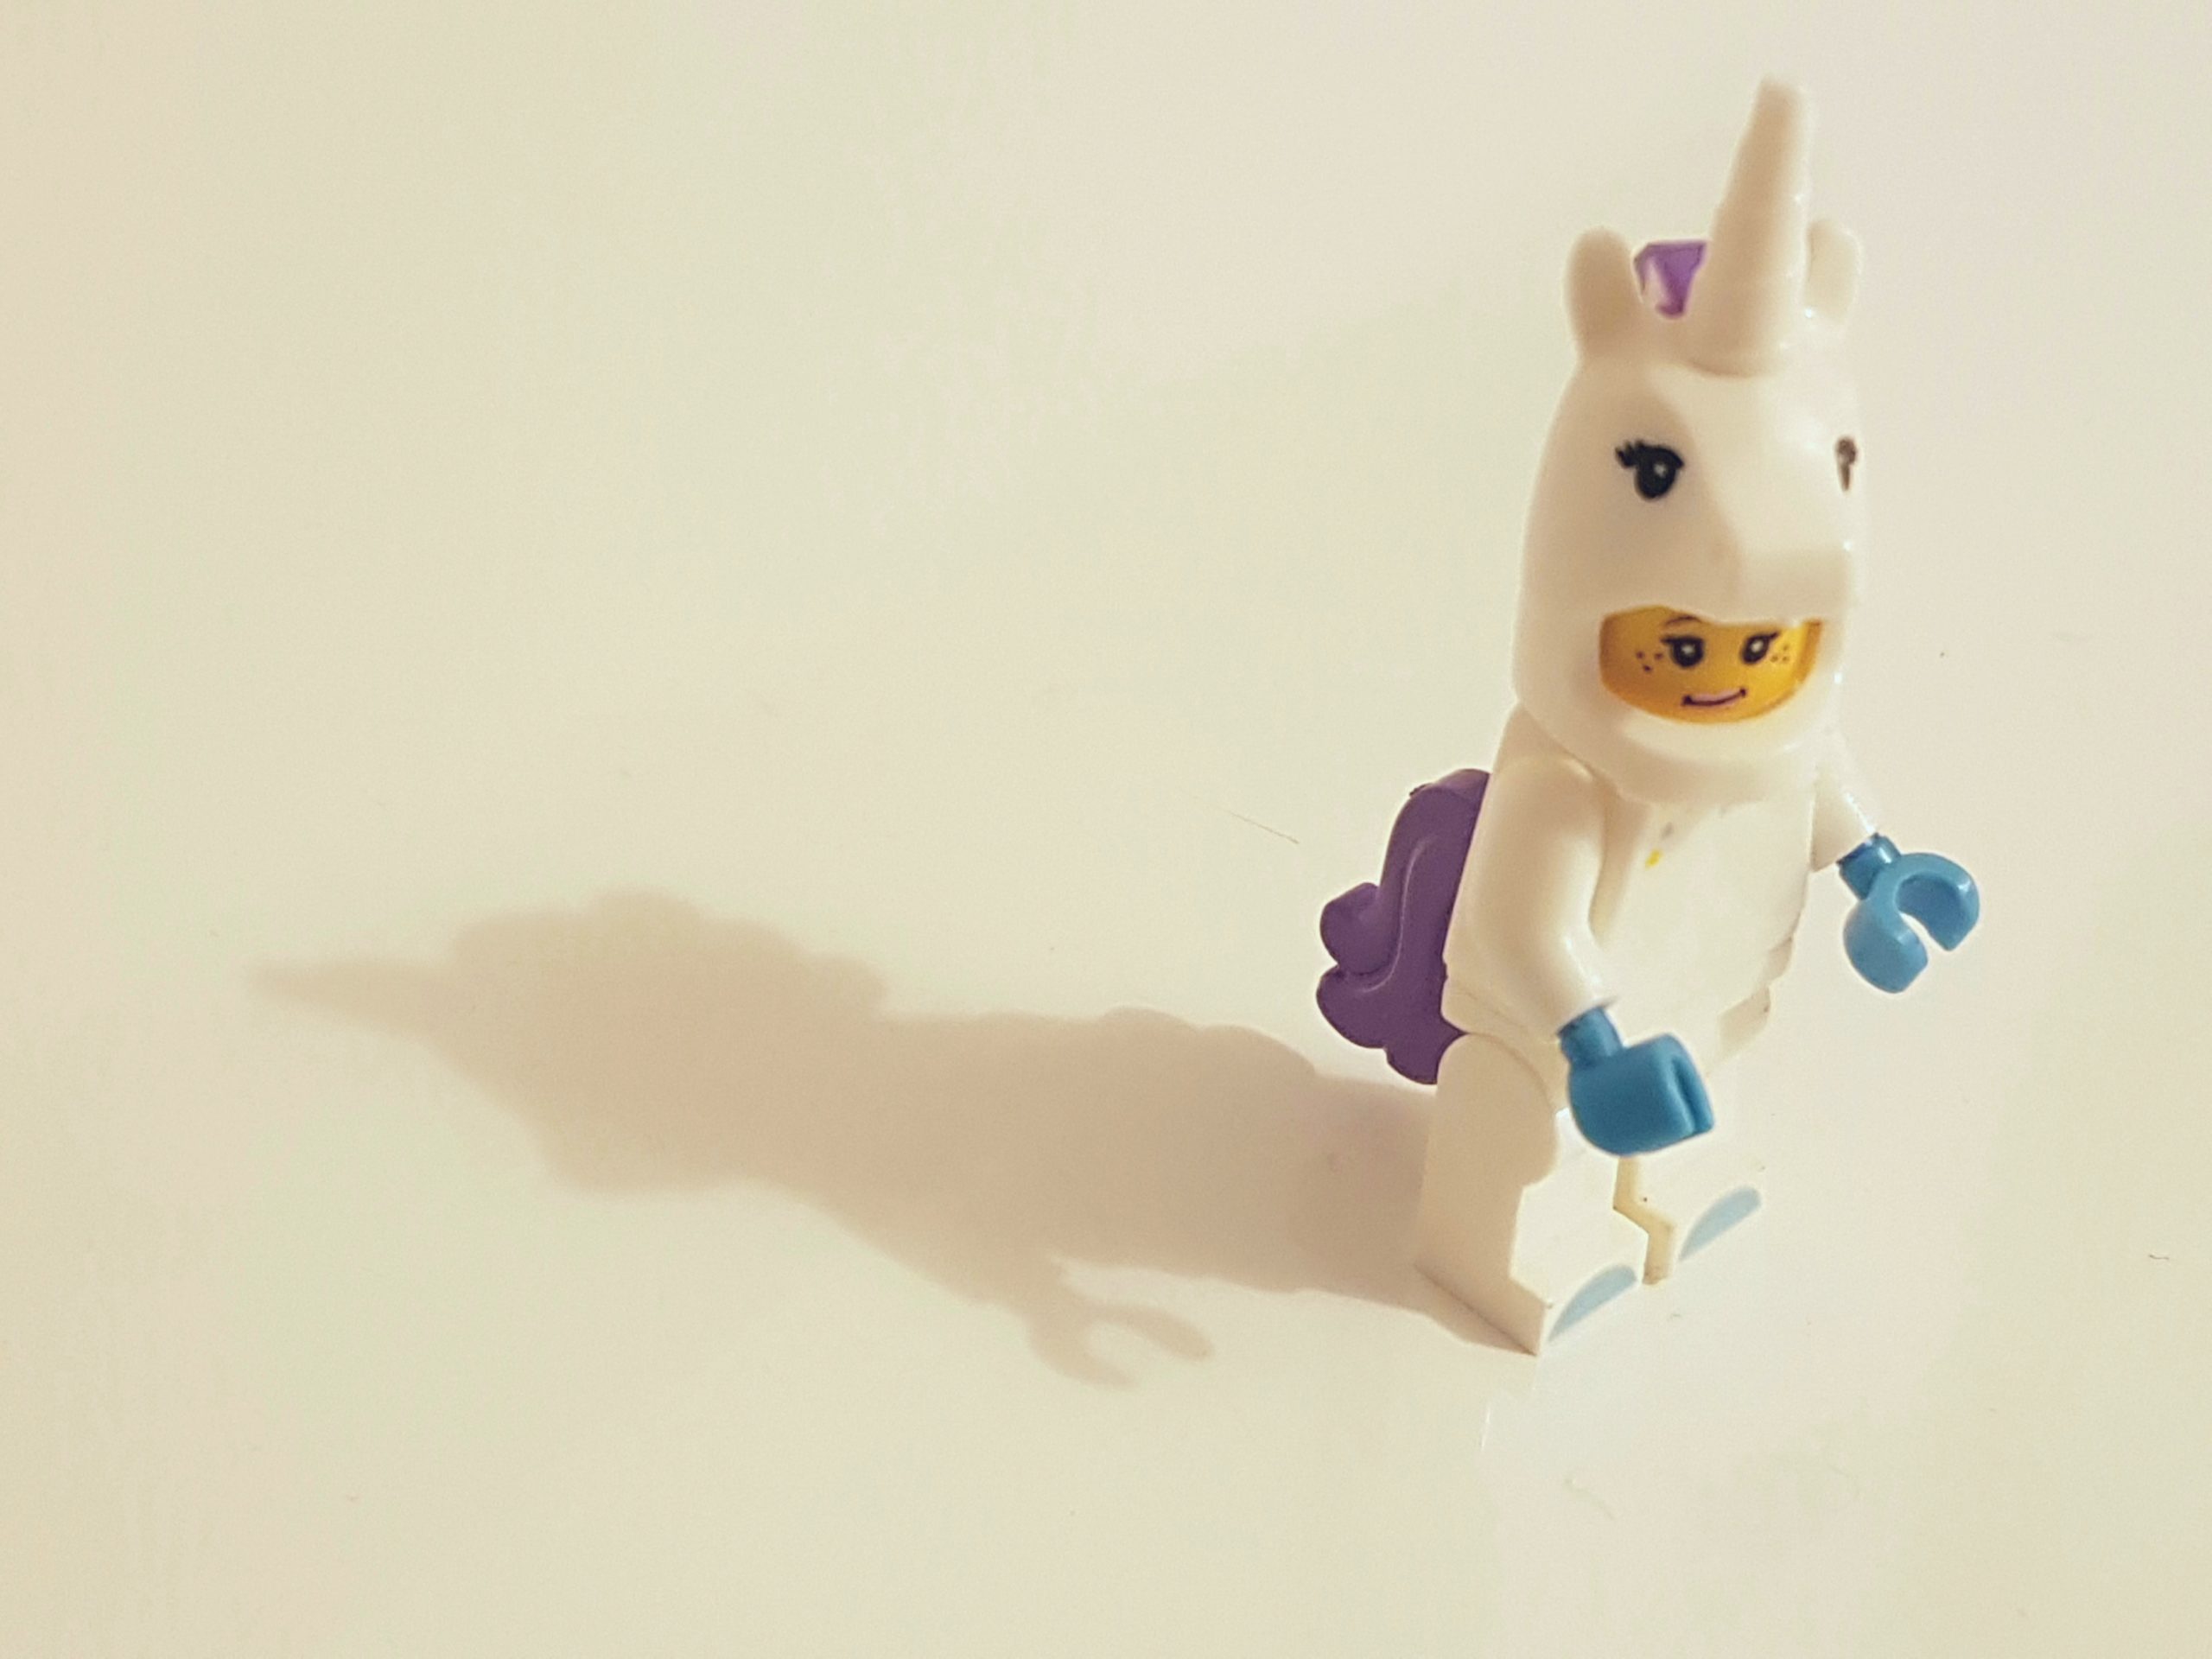 A lego in an unicorn costume